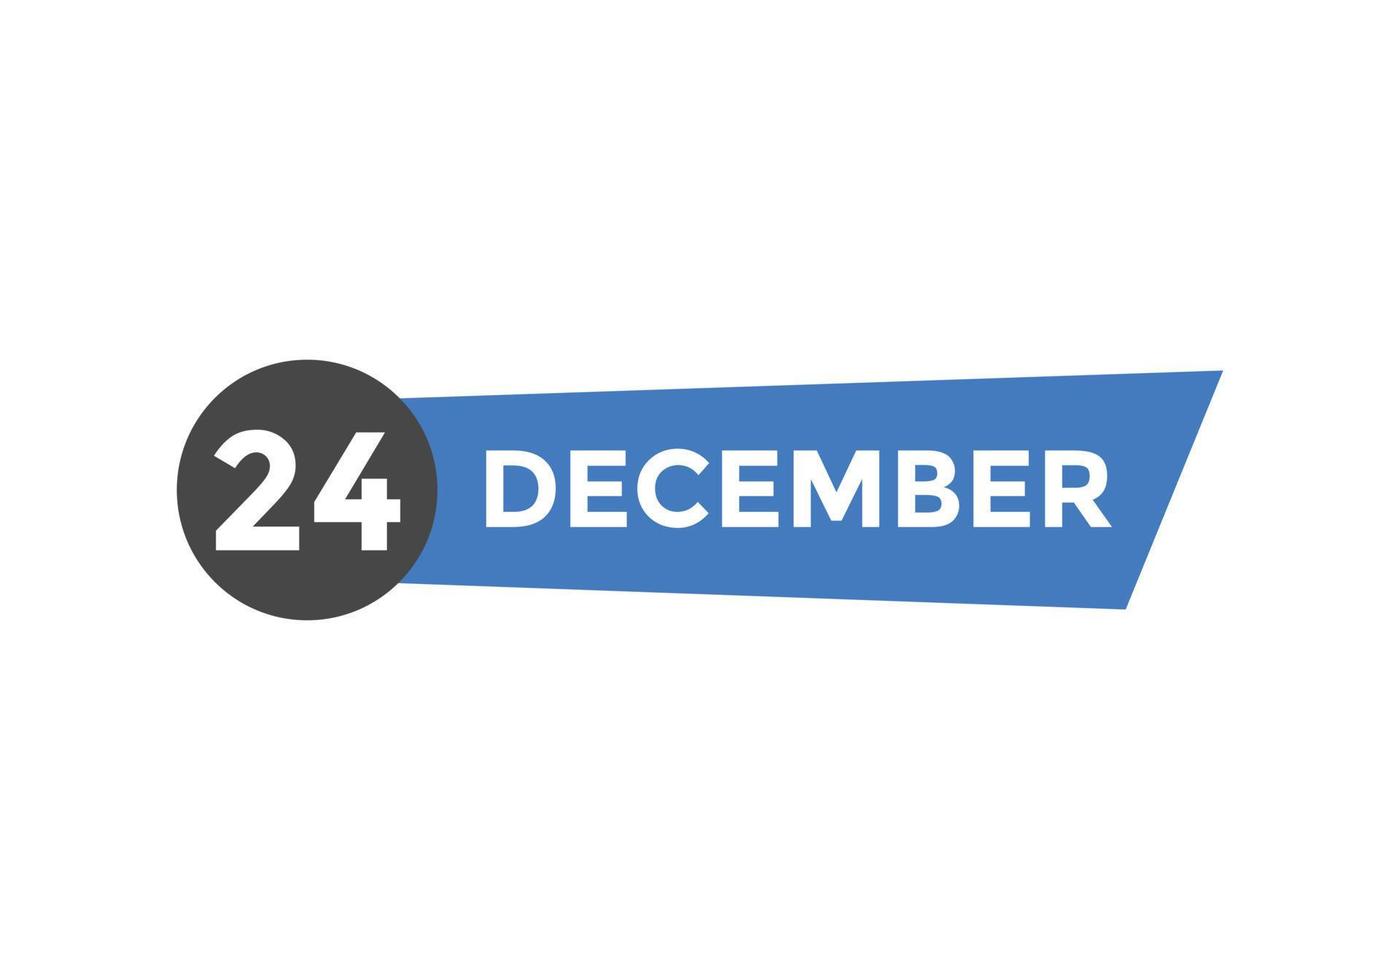 december 24 calendar reminder. 24th december daily calendar icon template. Calendar 24th december icon Design template. Vector illustration